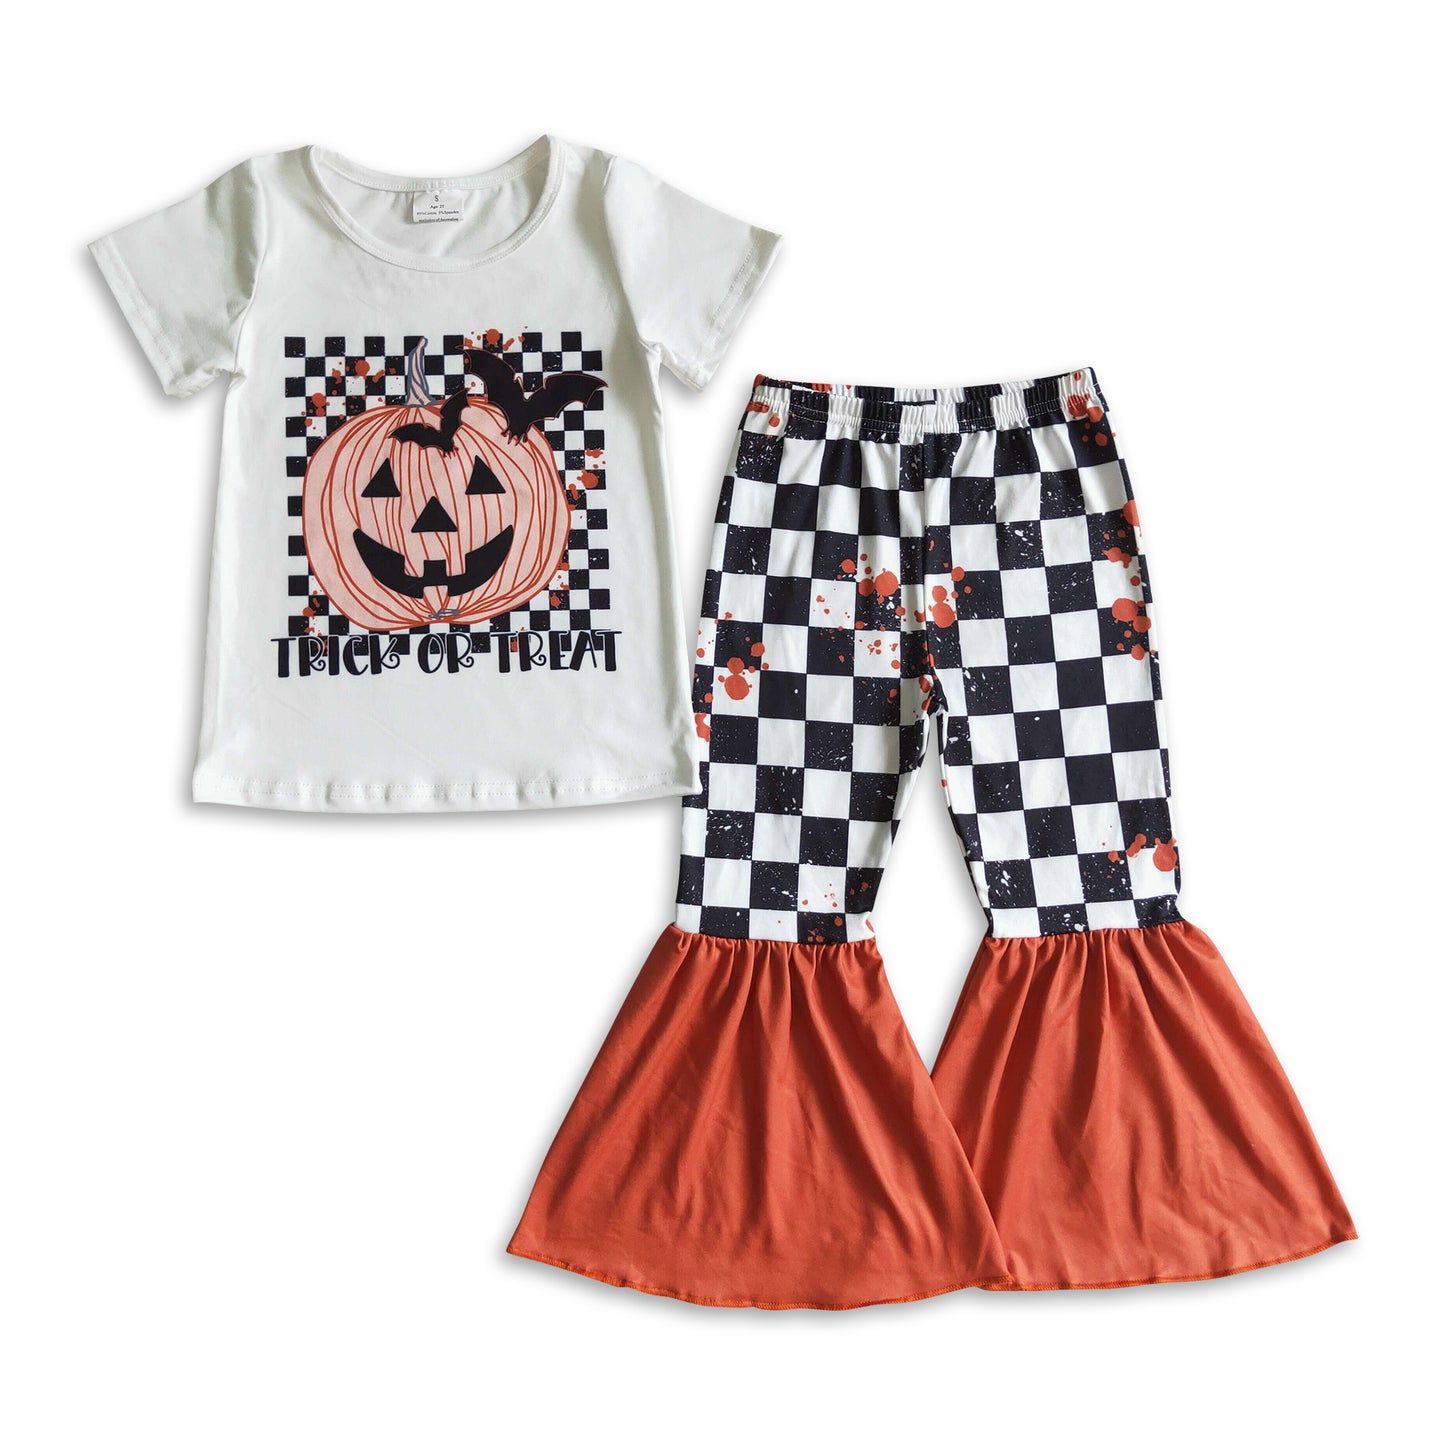 Trick or treat pumpkin plaid set girls Halloween clothes